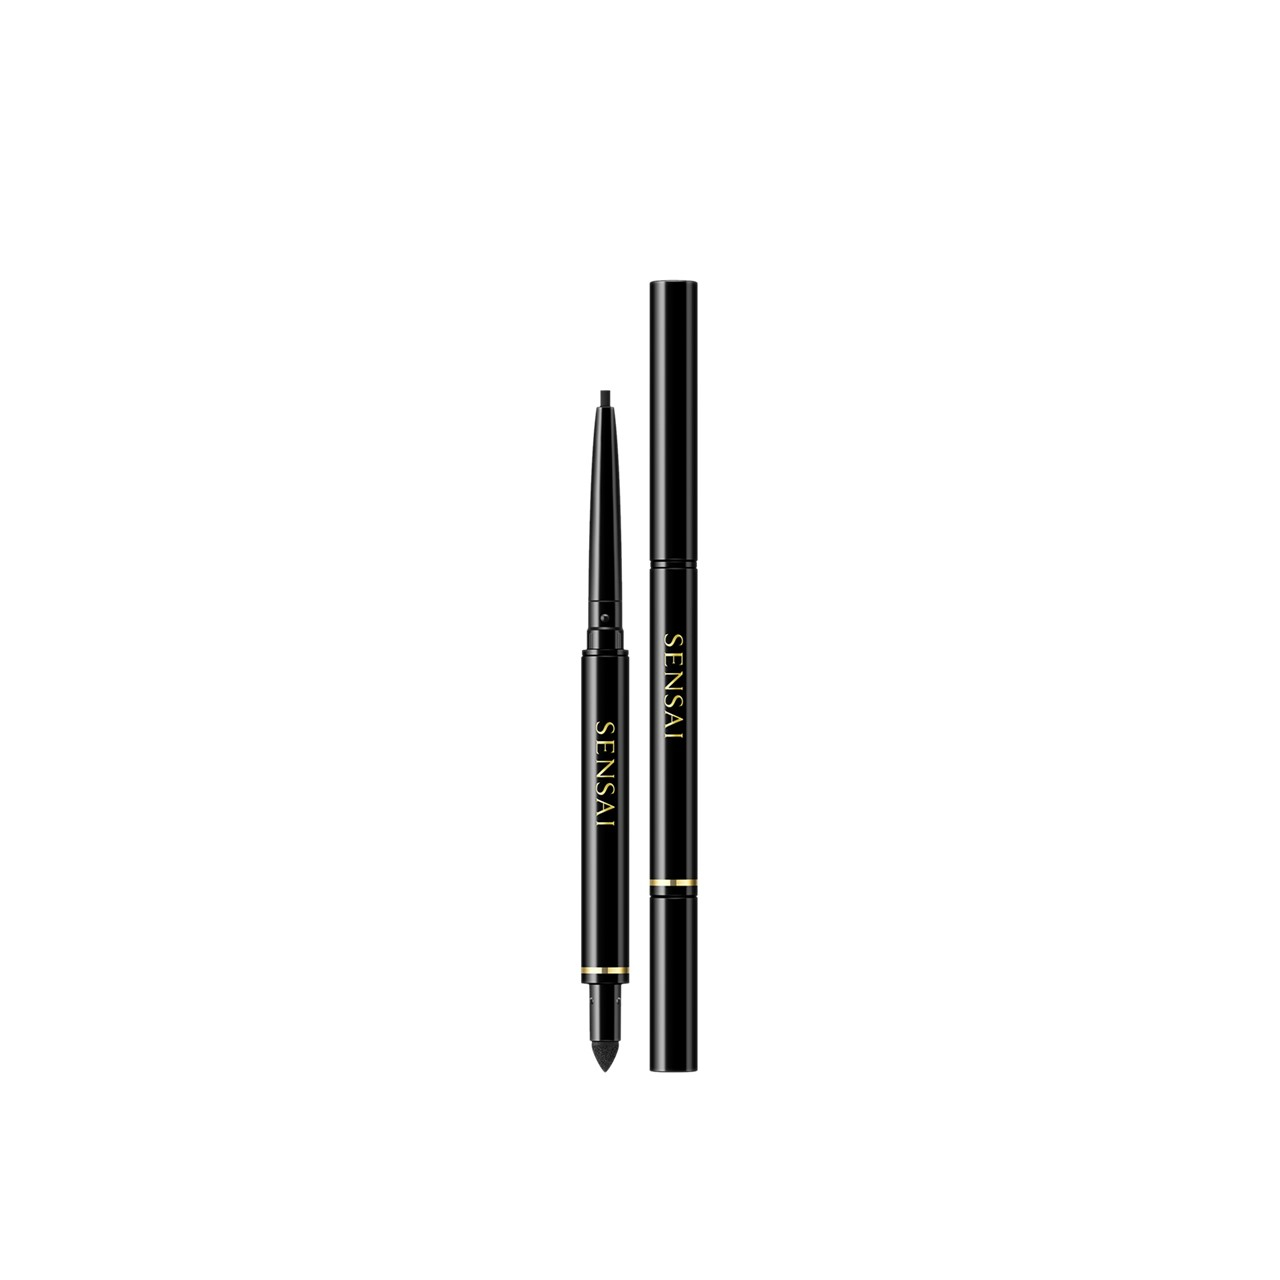 SENSAI Lasting Eyeliner Pencil 01 Black 0.1g